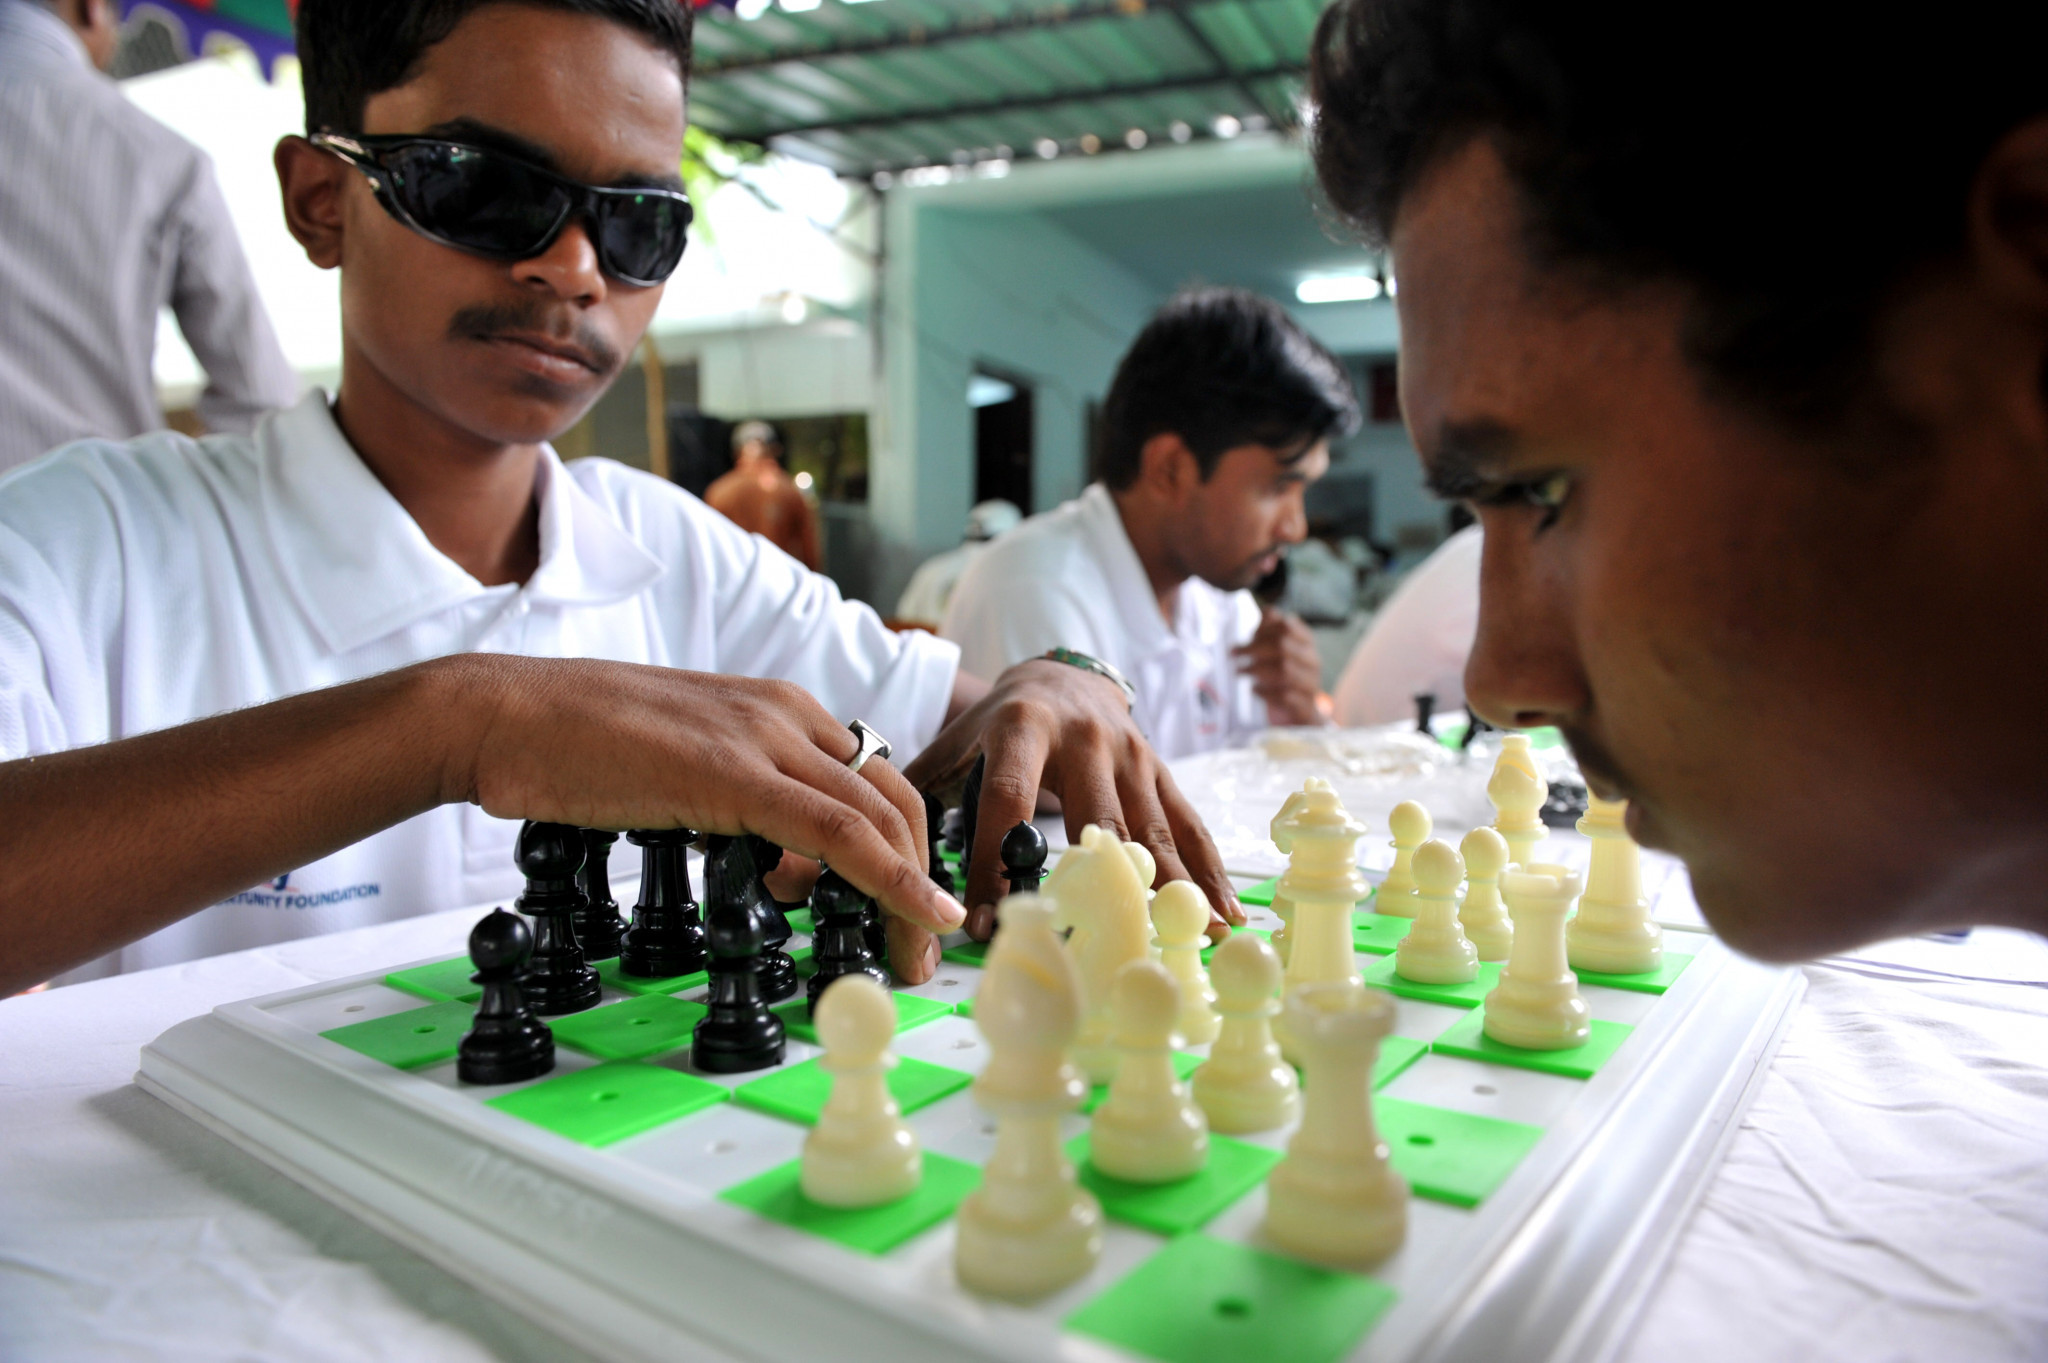 Blind chess competitions continue despite coronavirus crisis